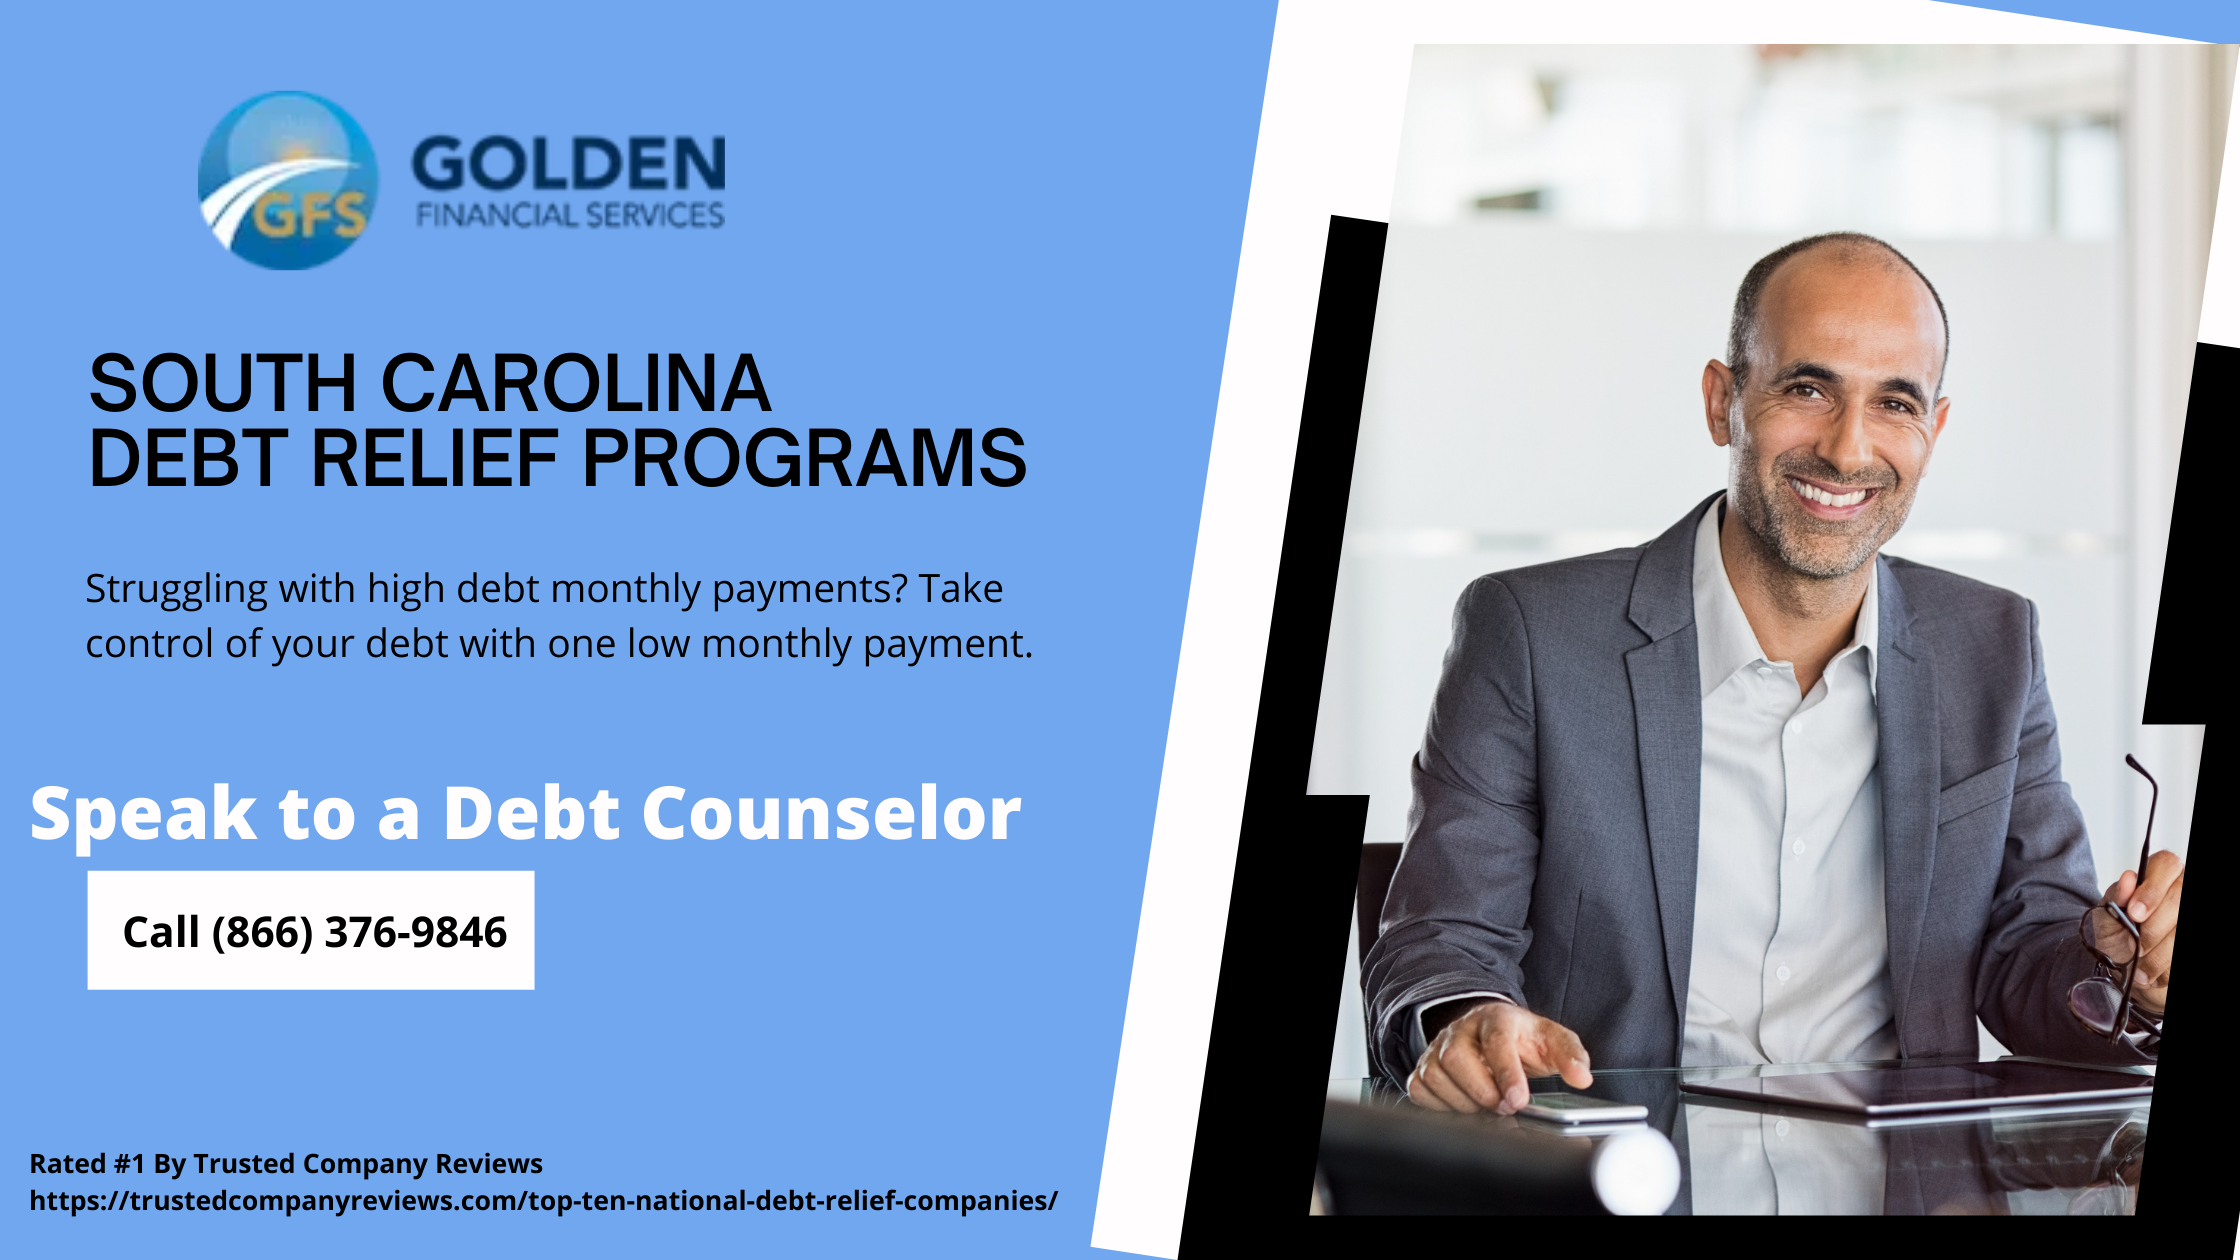 South Carolina Debt Relief programs